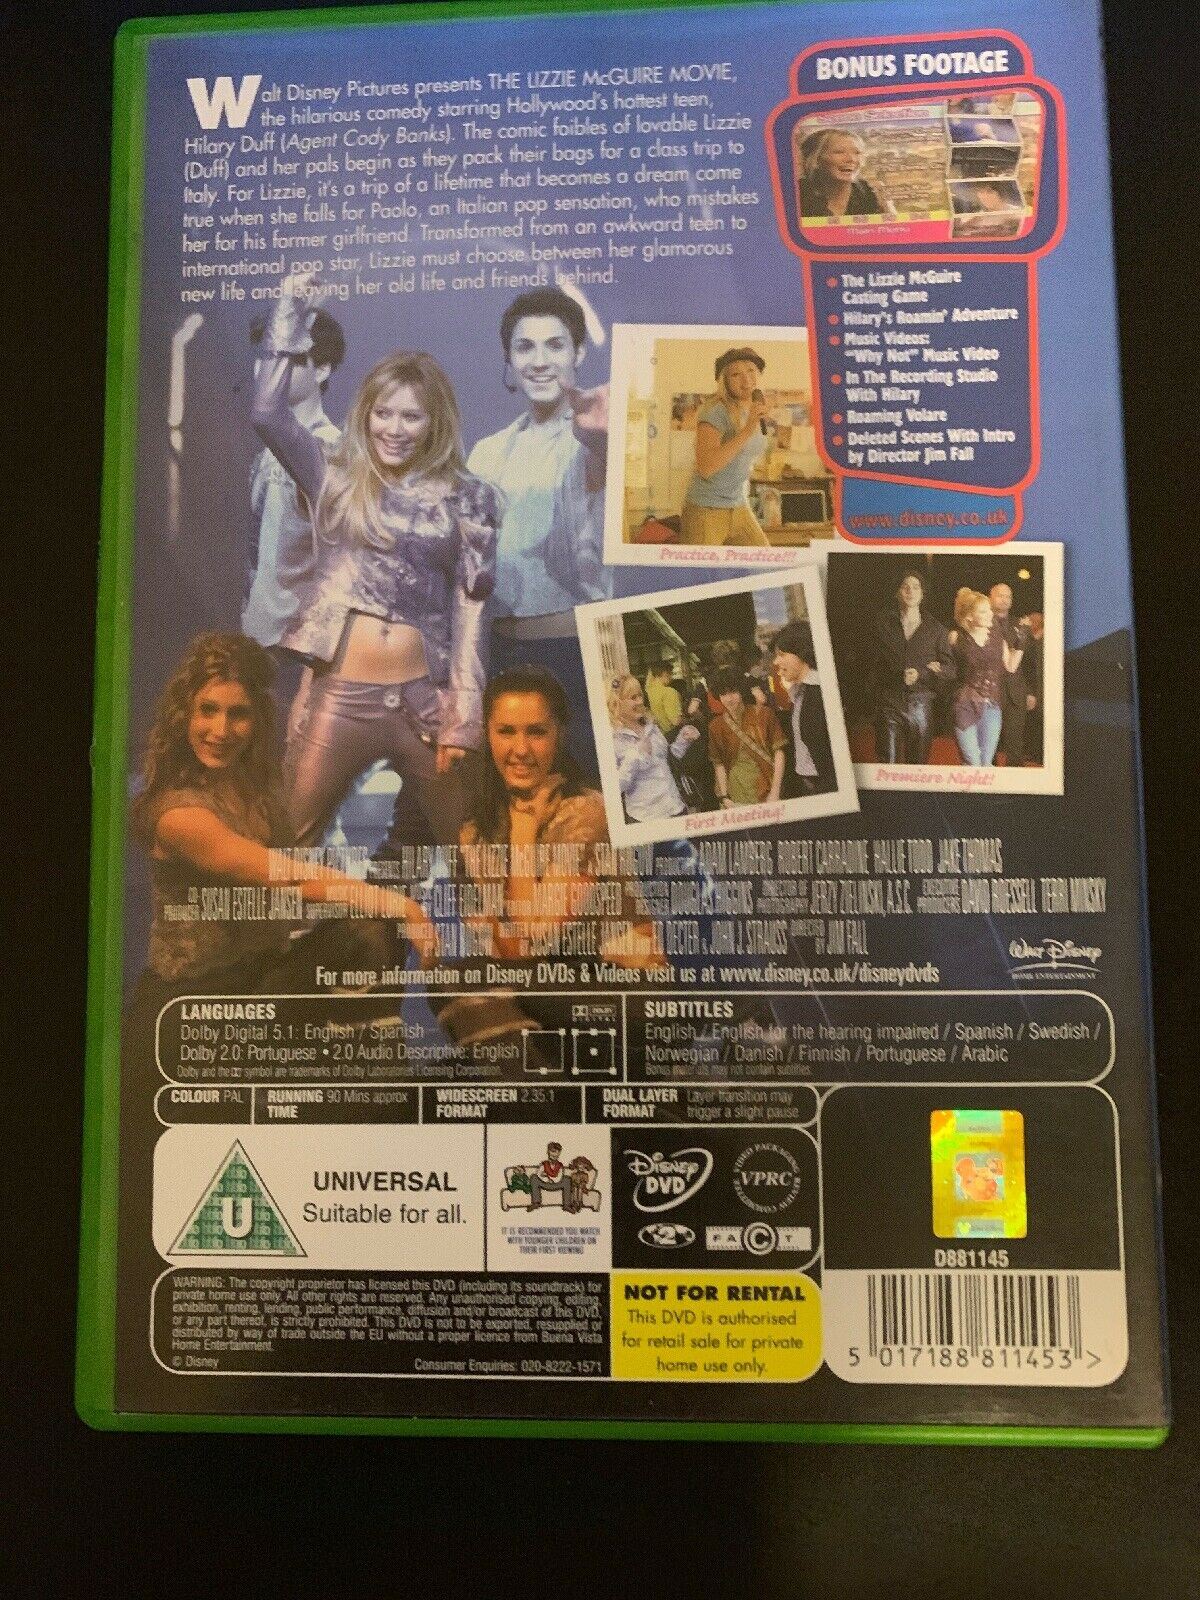 Hilary Duff-The Lizzie Mcguire Movie (DVD) Region 4 - Free Oz Postage!